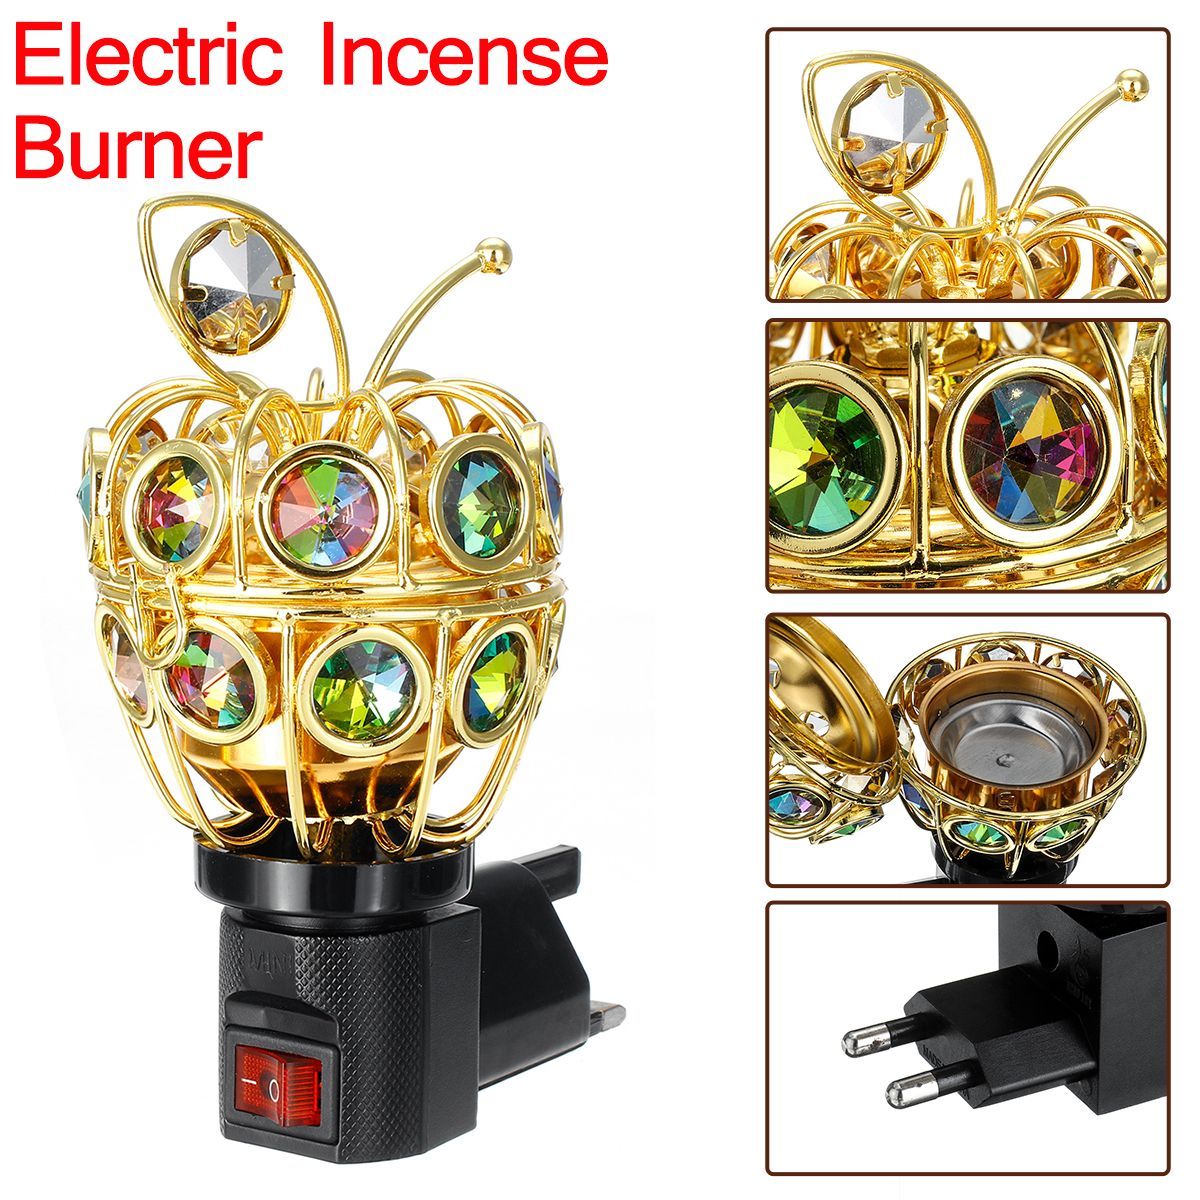 Wireless-Arabian-Incense-burner-Bakhoor-Electric-Metal-Eid-Traditional-EU-PLUG-1694344